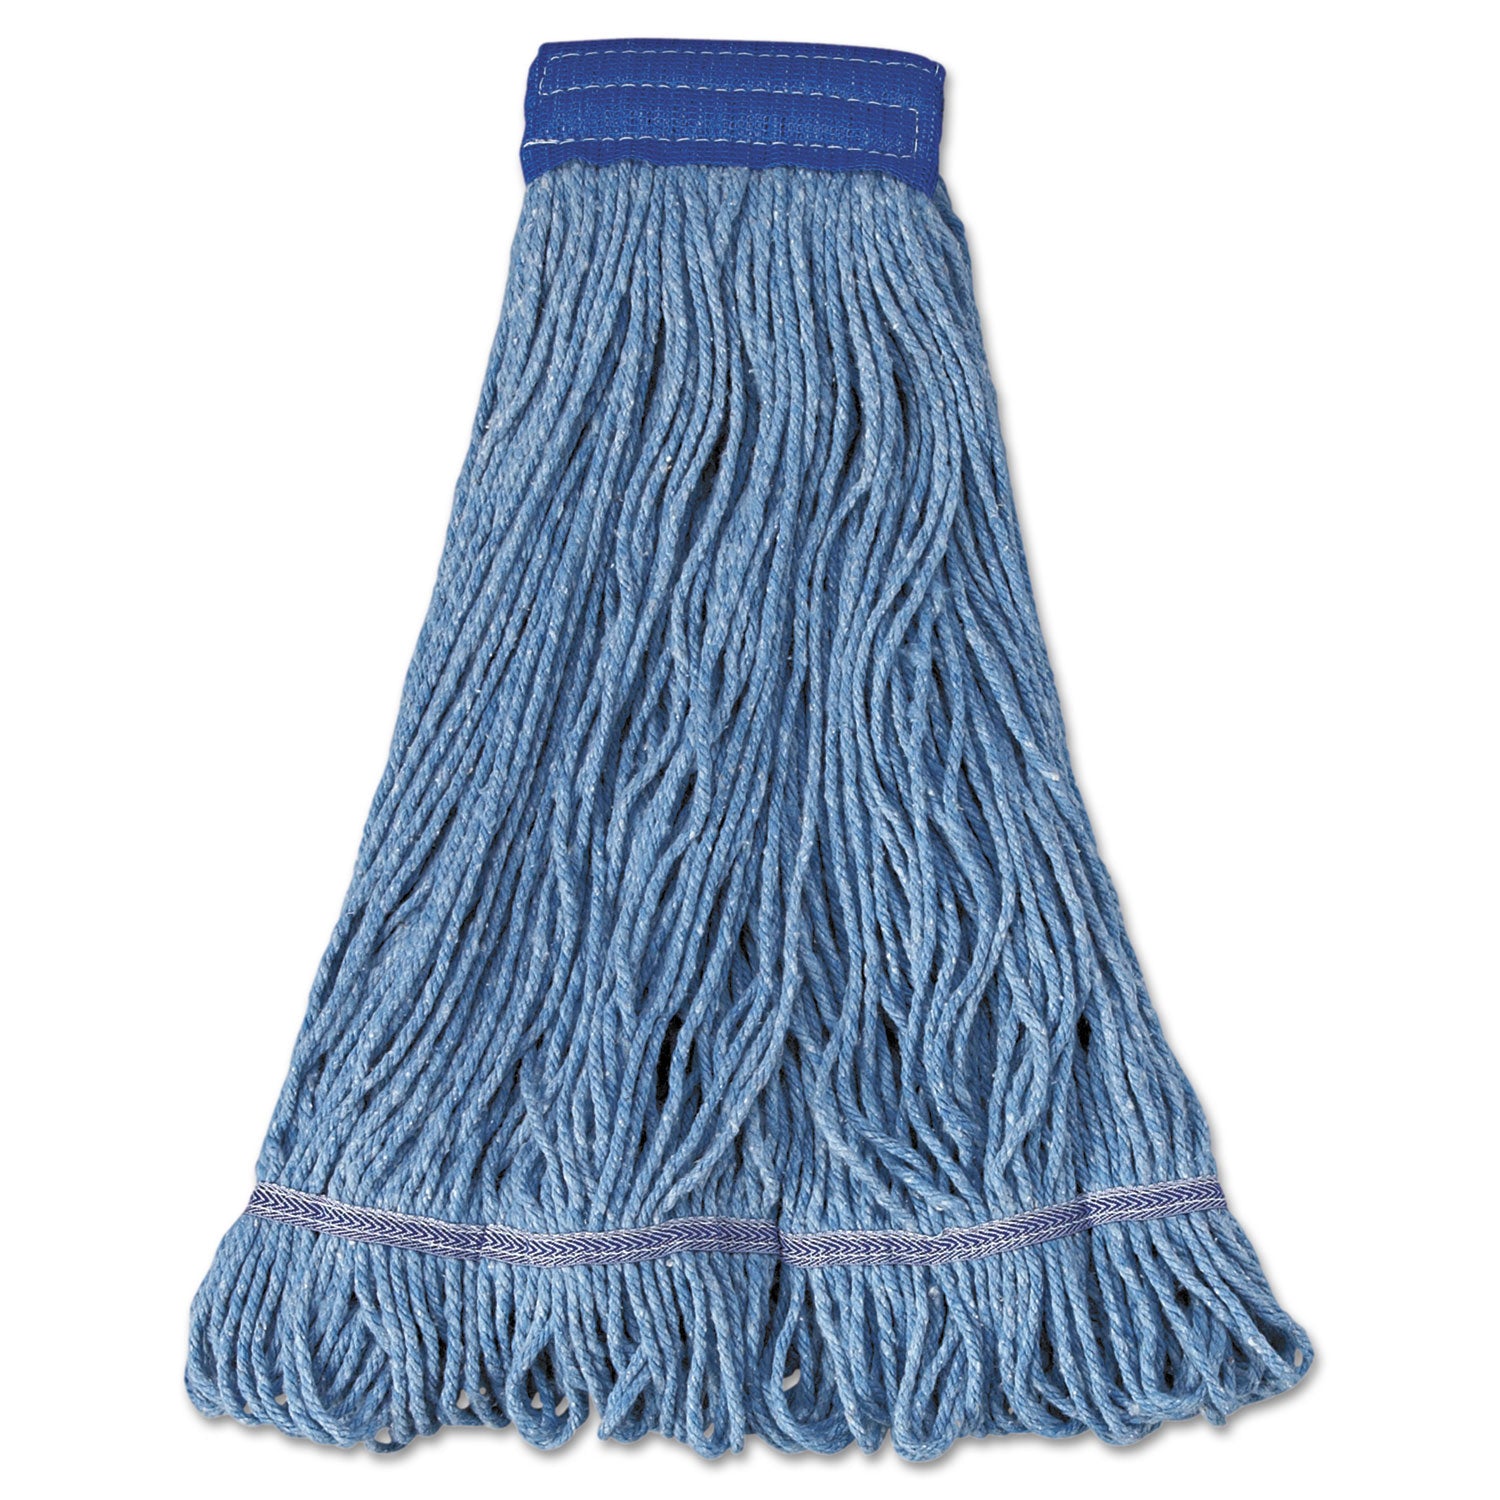 Super Loop Wet Mop Head, Cotton/Synthetic Fiber, 5" Headband, X-Large Size, Blue, 12/Carton - 